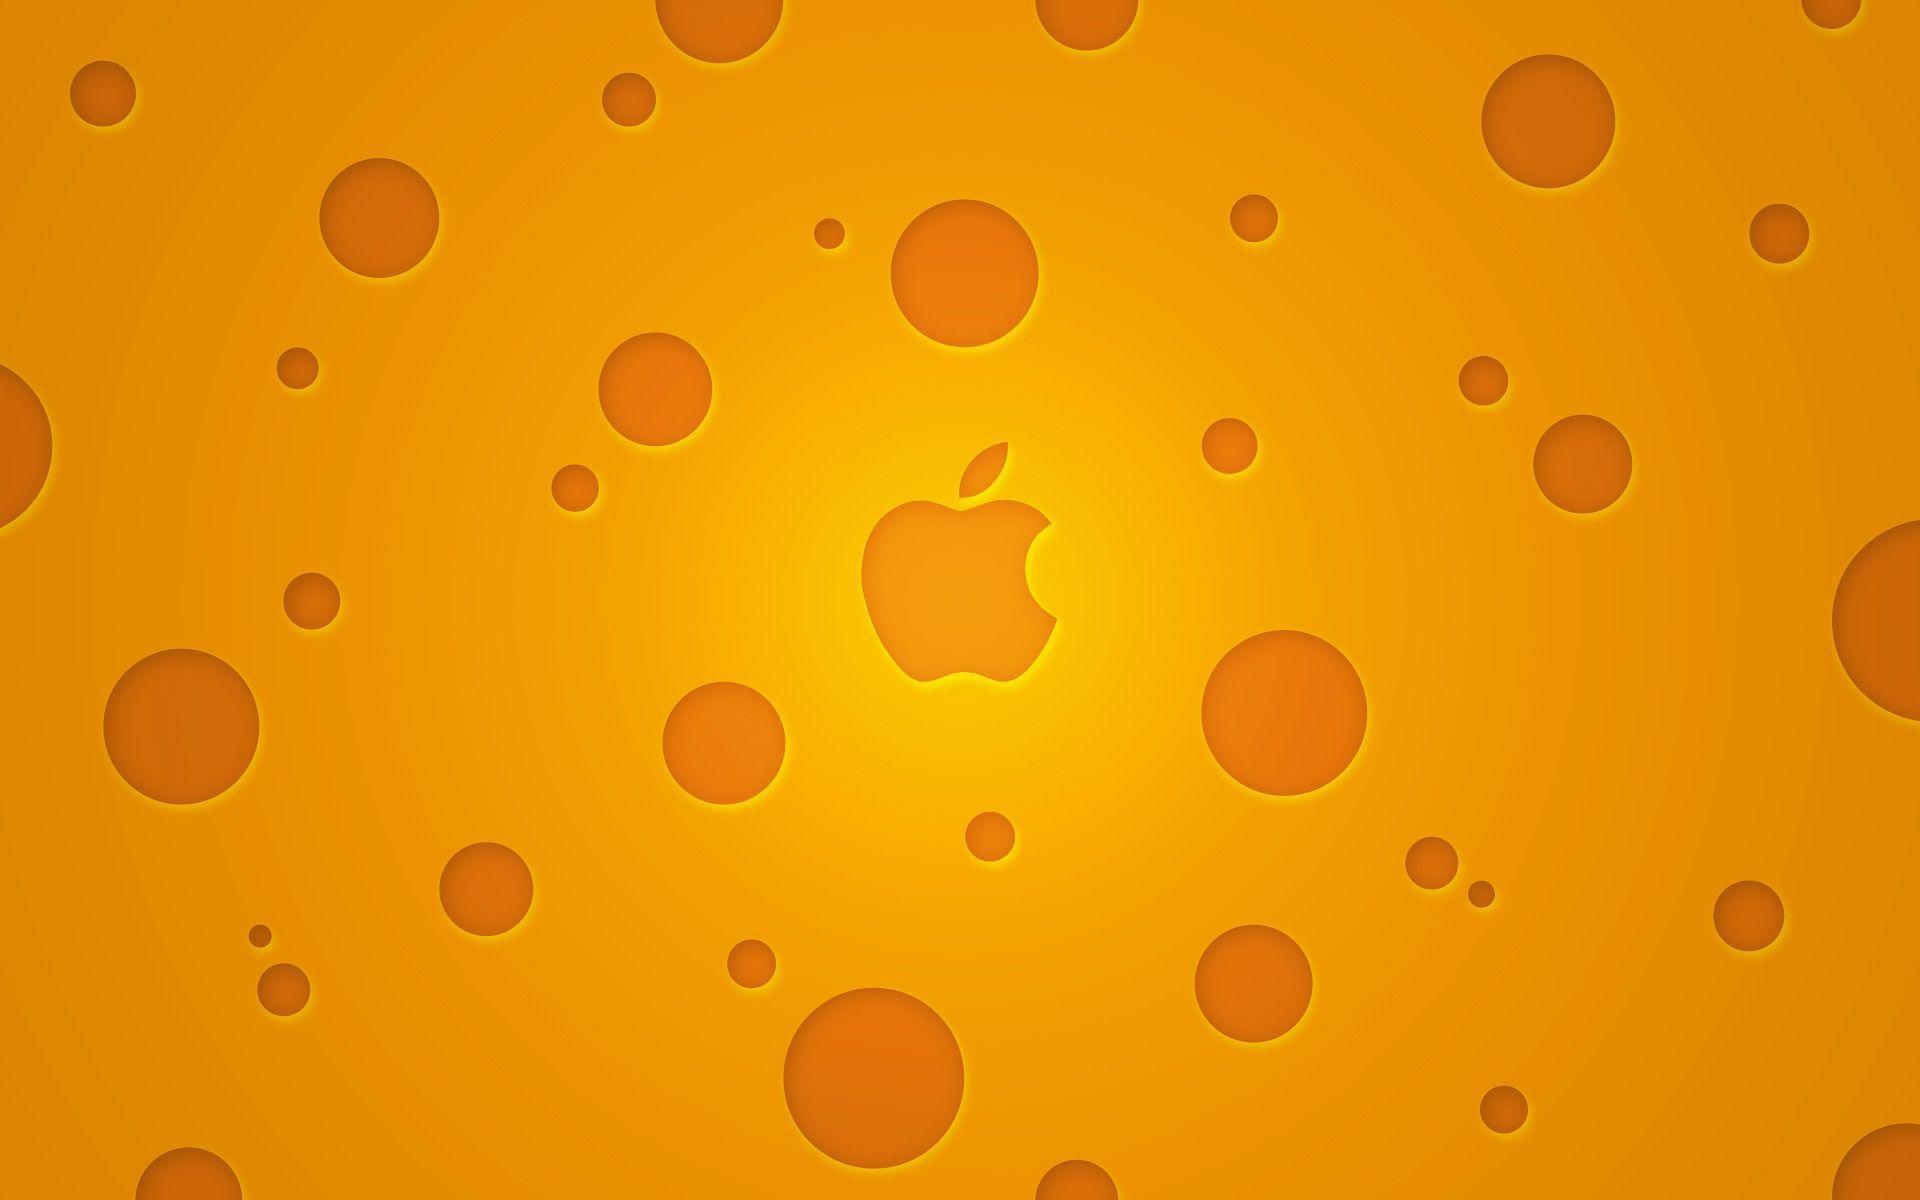 Apple Mac Wallpaper HD wallpaper